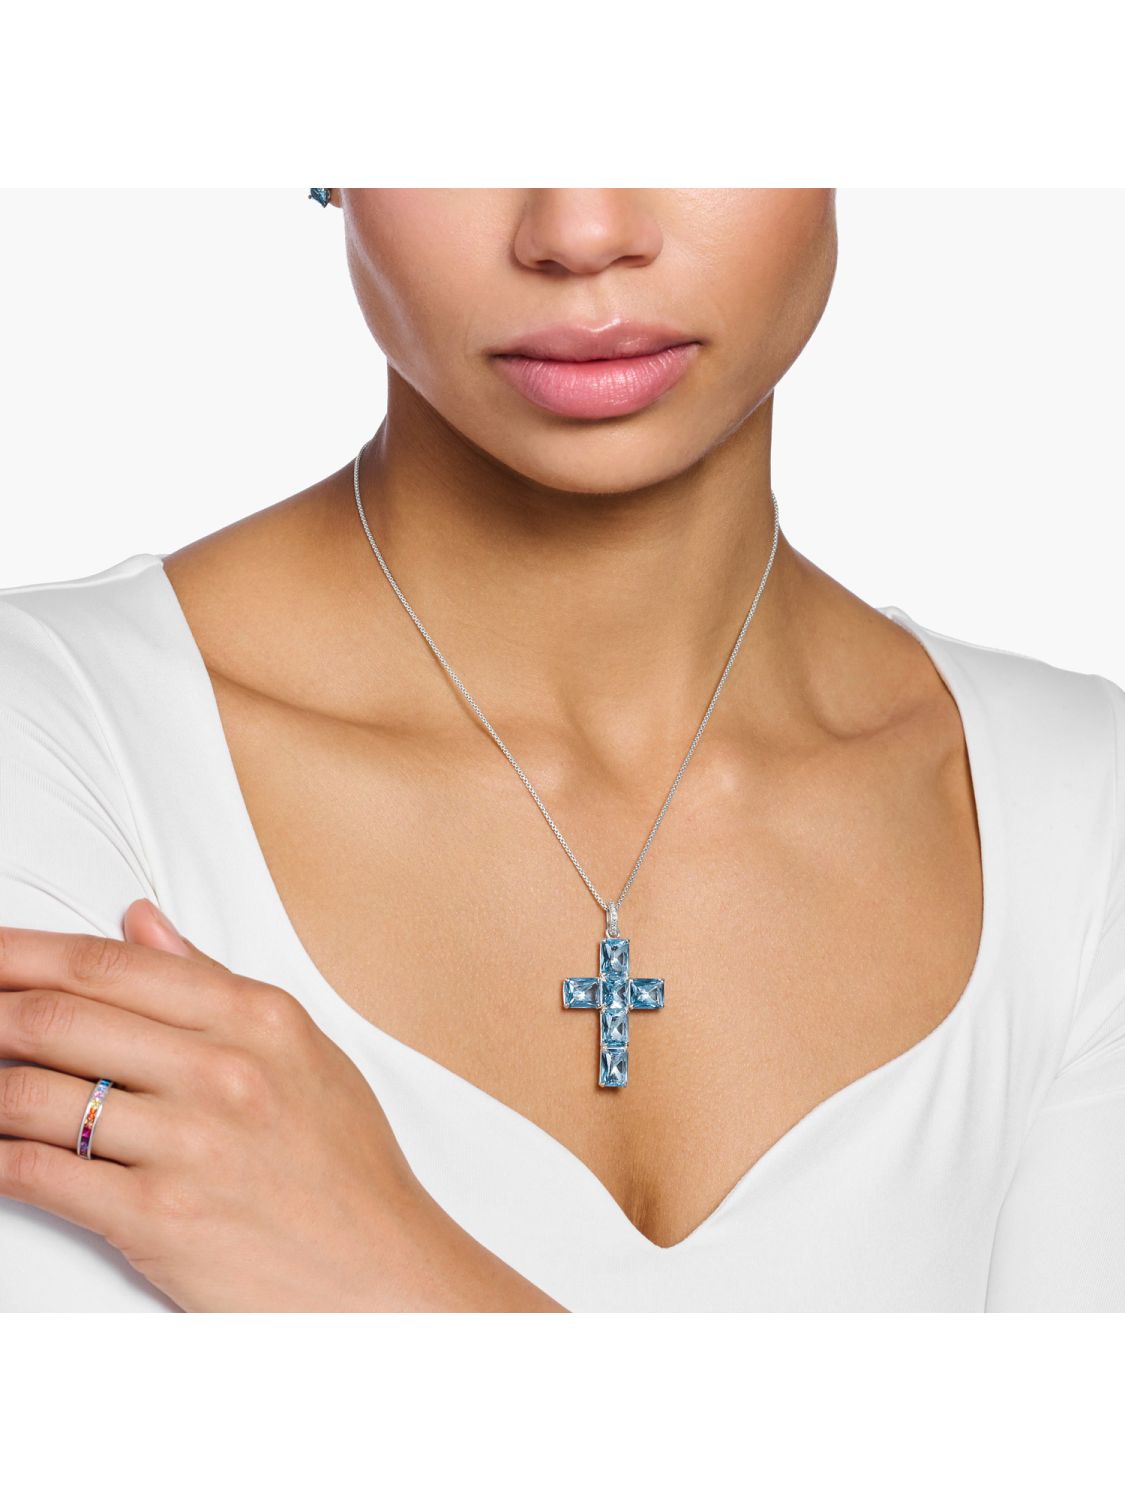 Sterling Silver Pink CZ Cross Crucifix Necklace Pendant Thomas Sabo  SPARKLE! | eBay